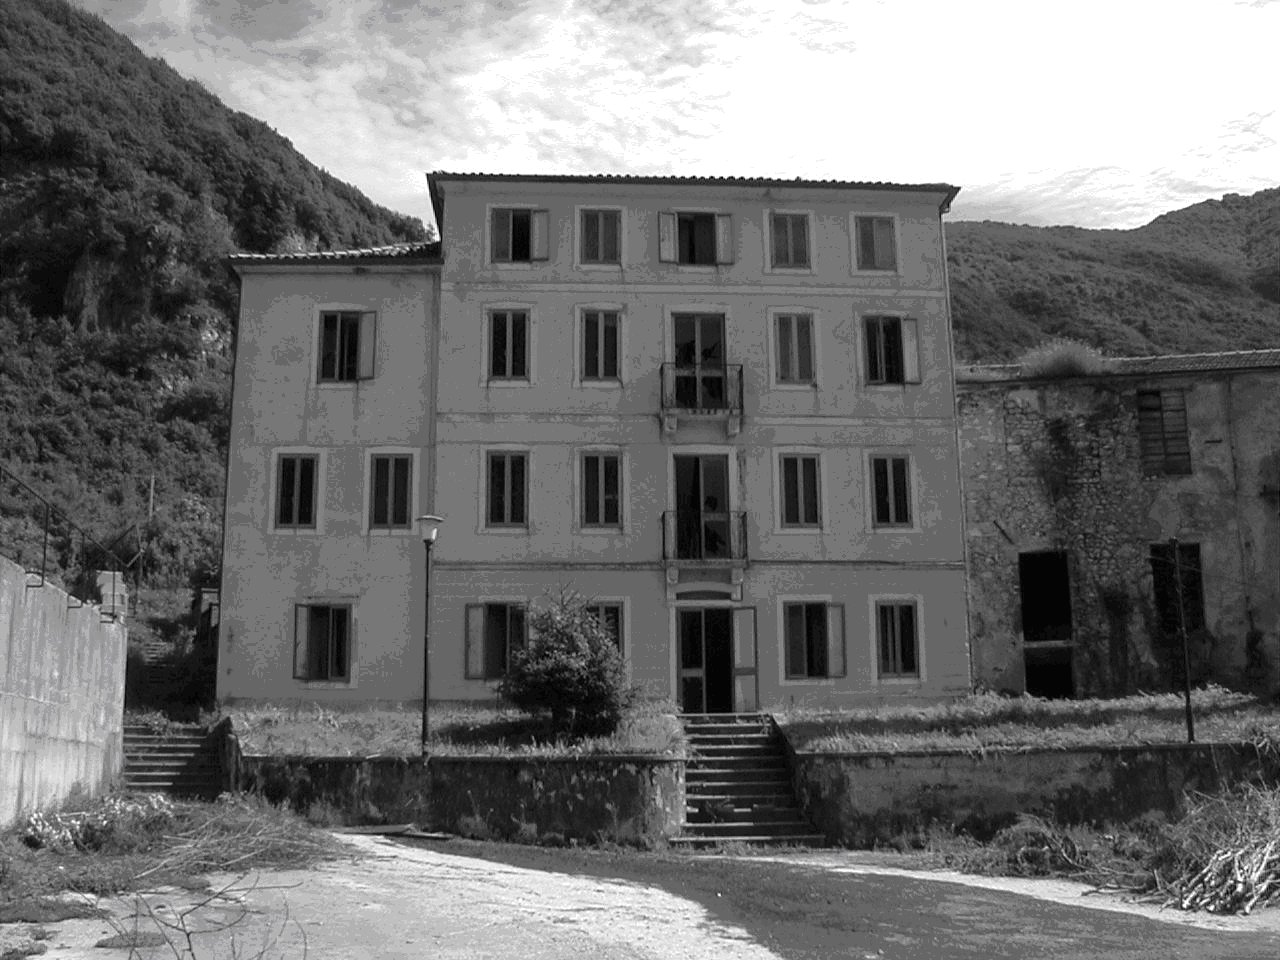 Palazzo residenziale - Ex Cartiera (palazzo) - Vas (BL)  (XIX)